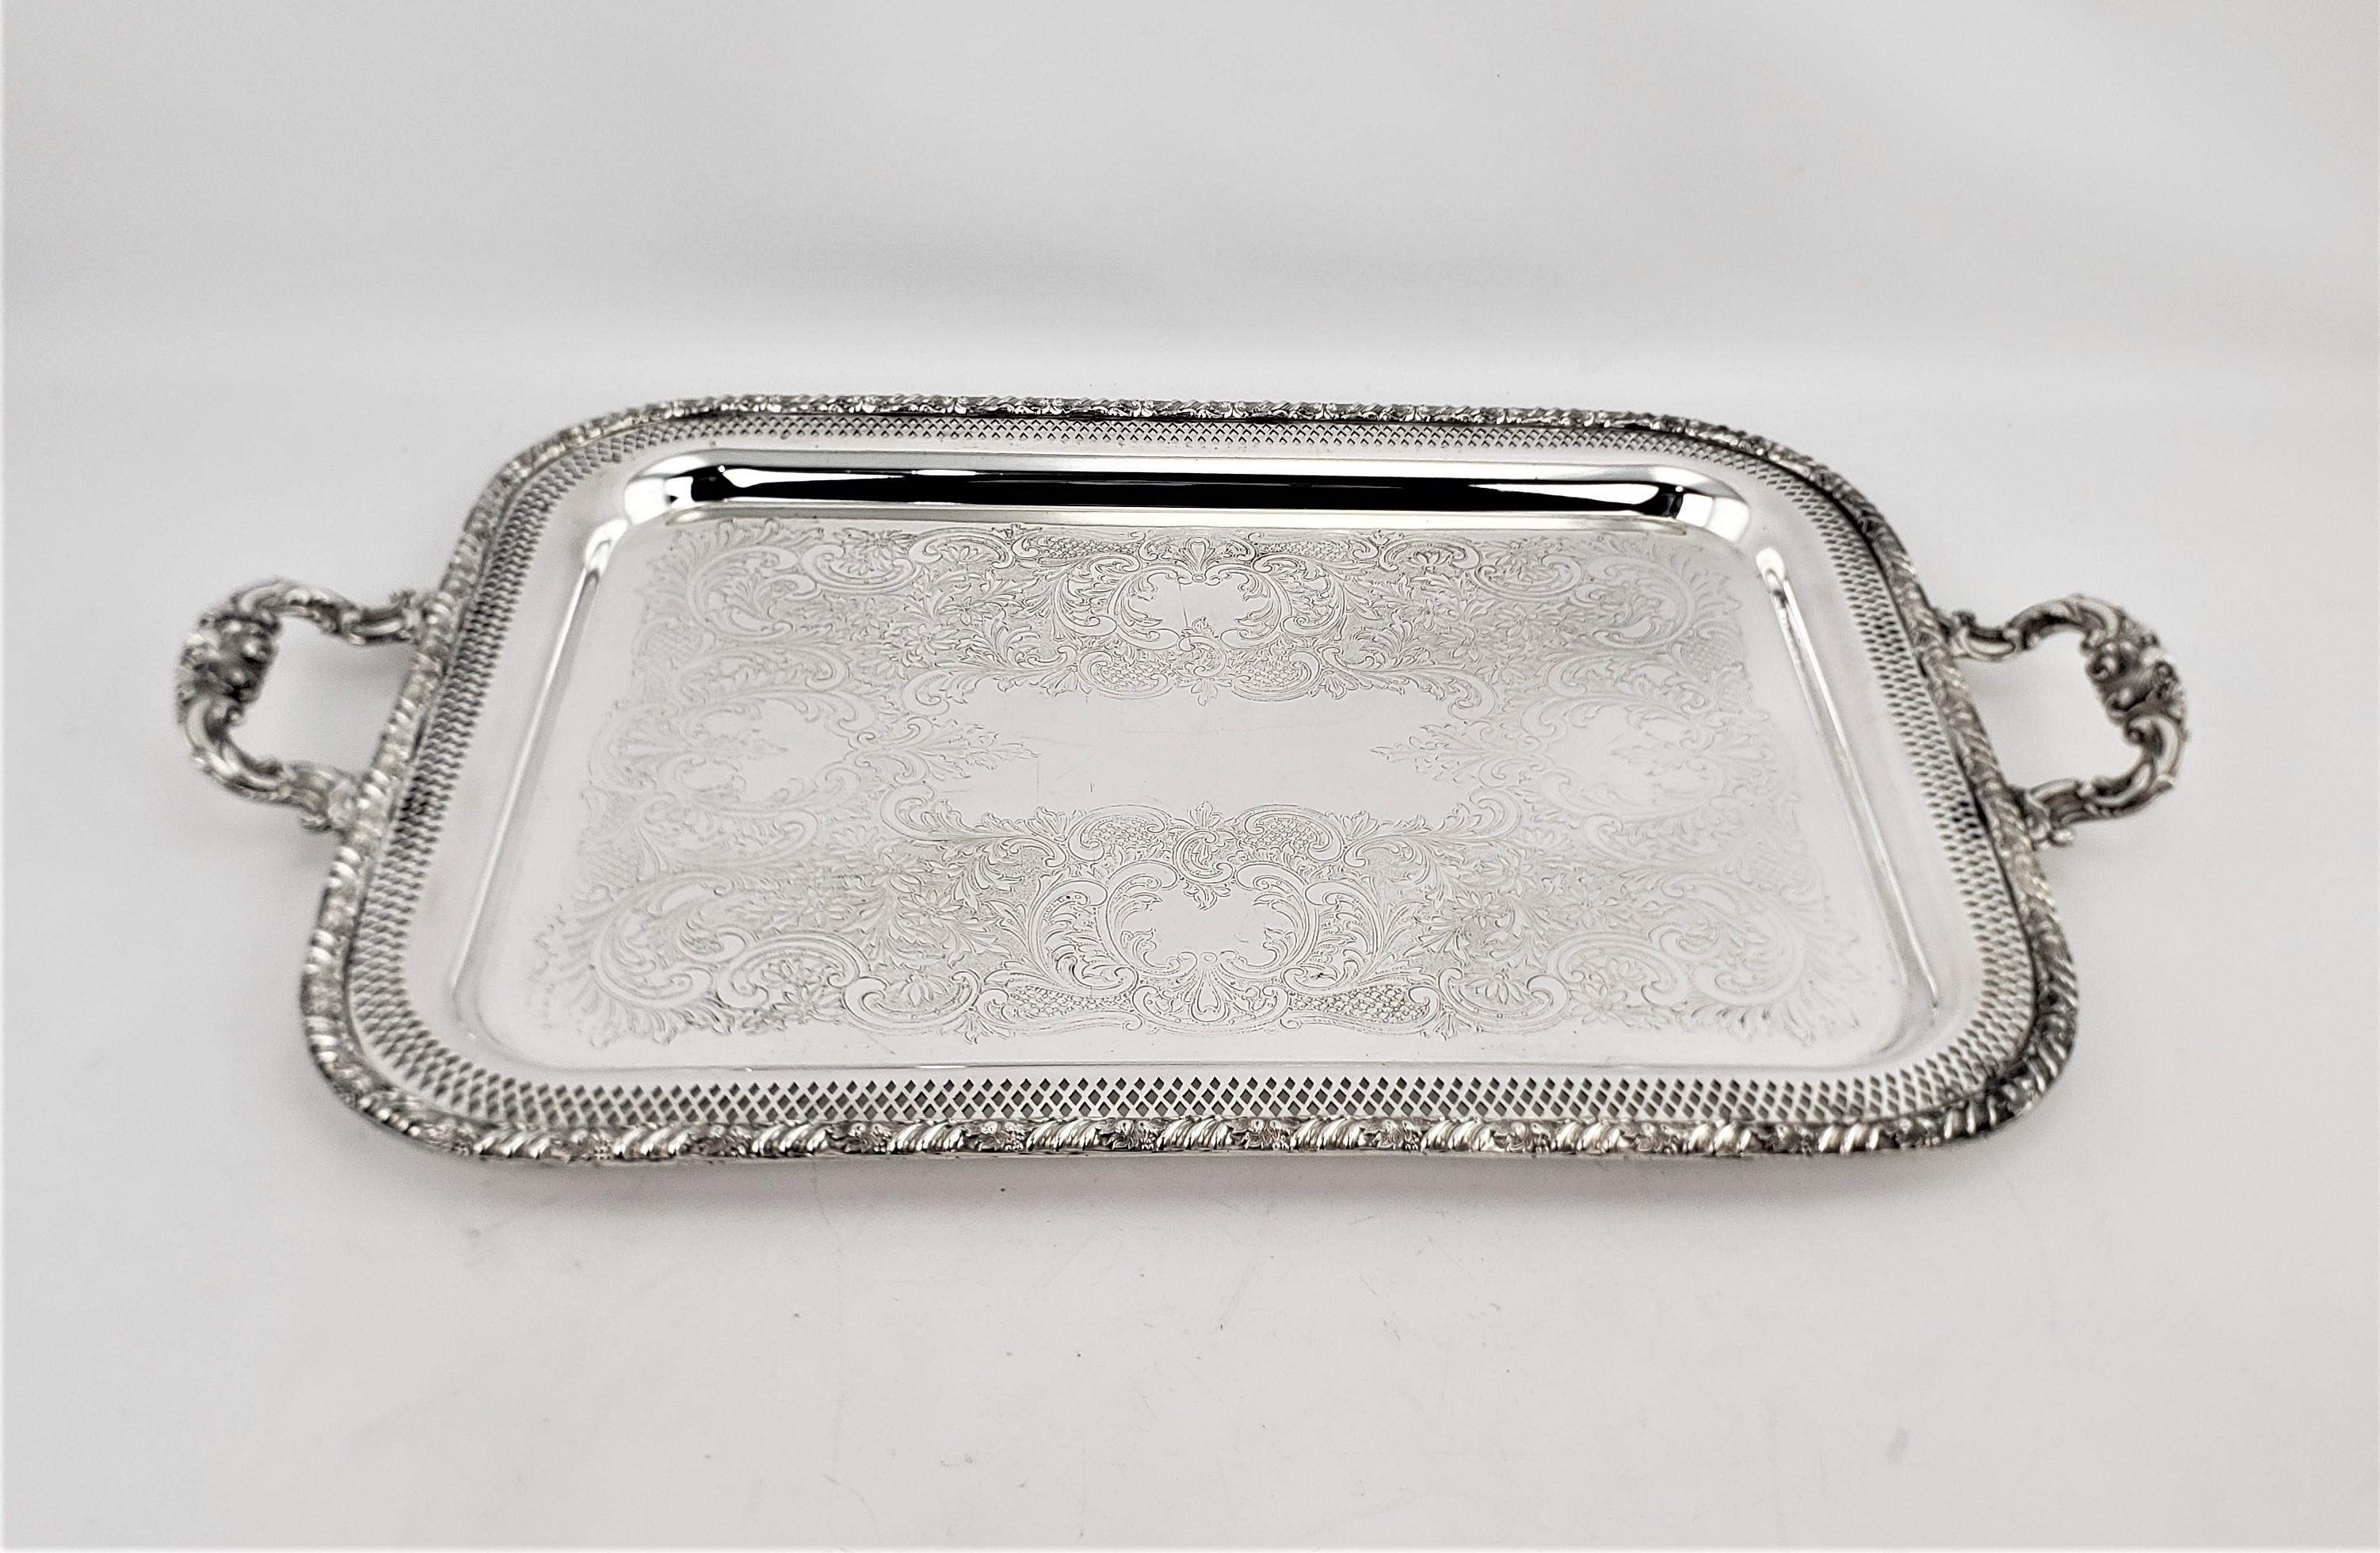 sheffield silver tray